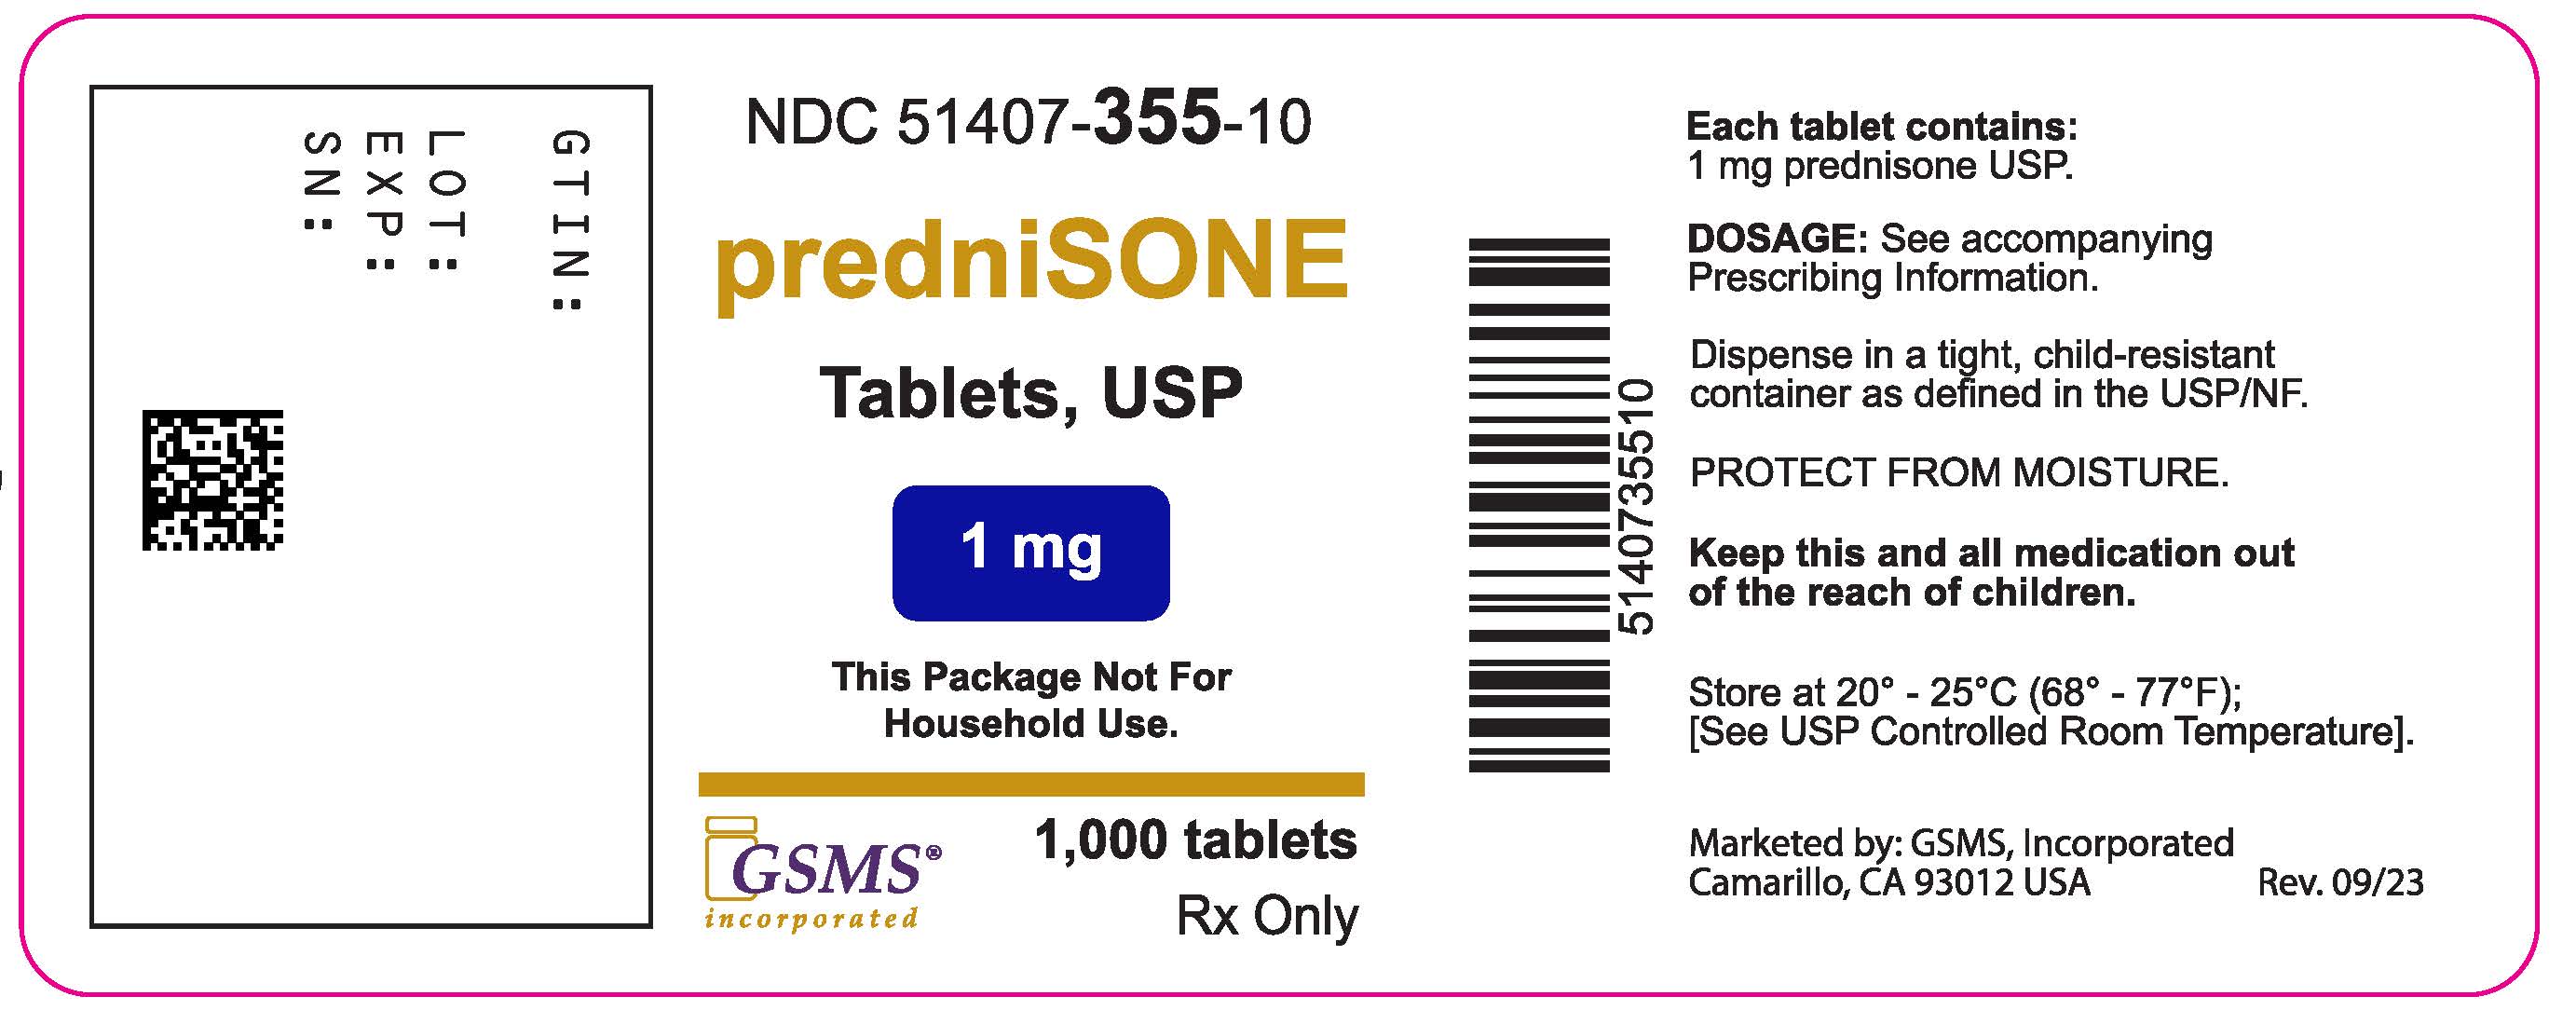 51407-355-10LB - Prednisone Tablets - Rev. 0923.jpg